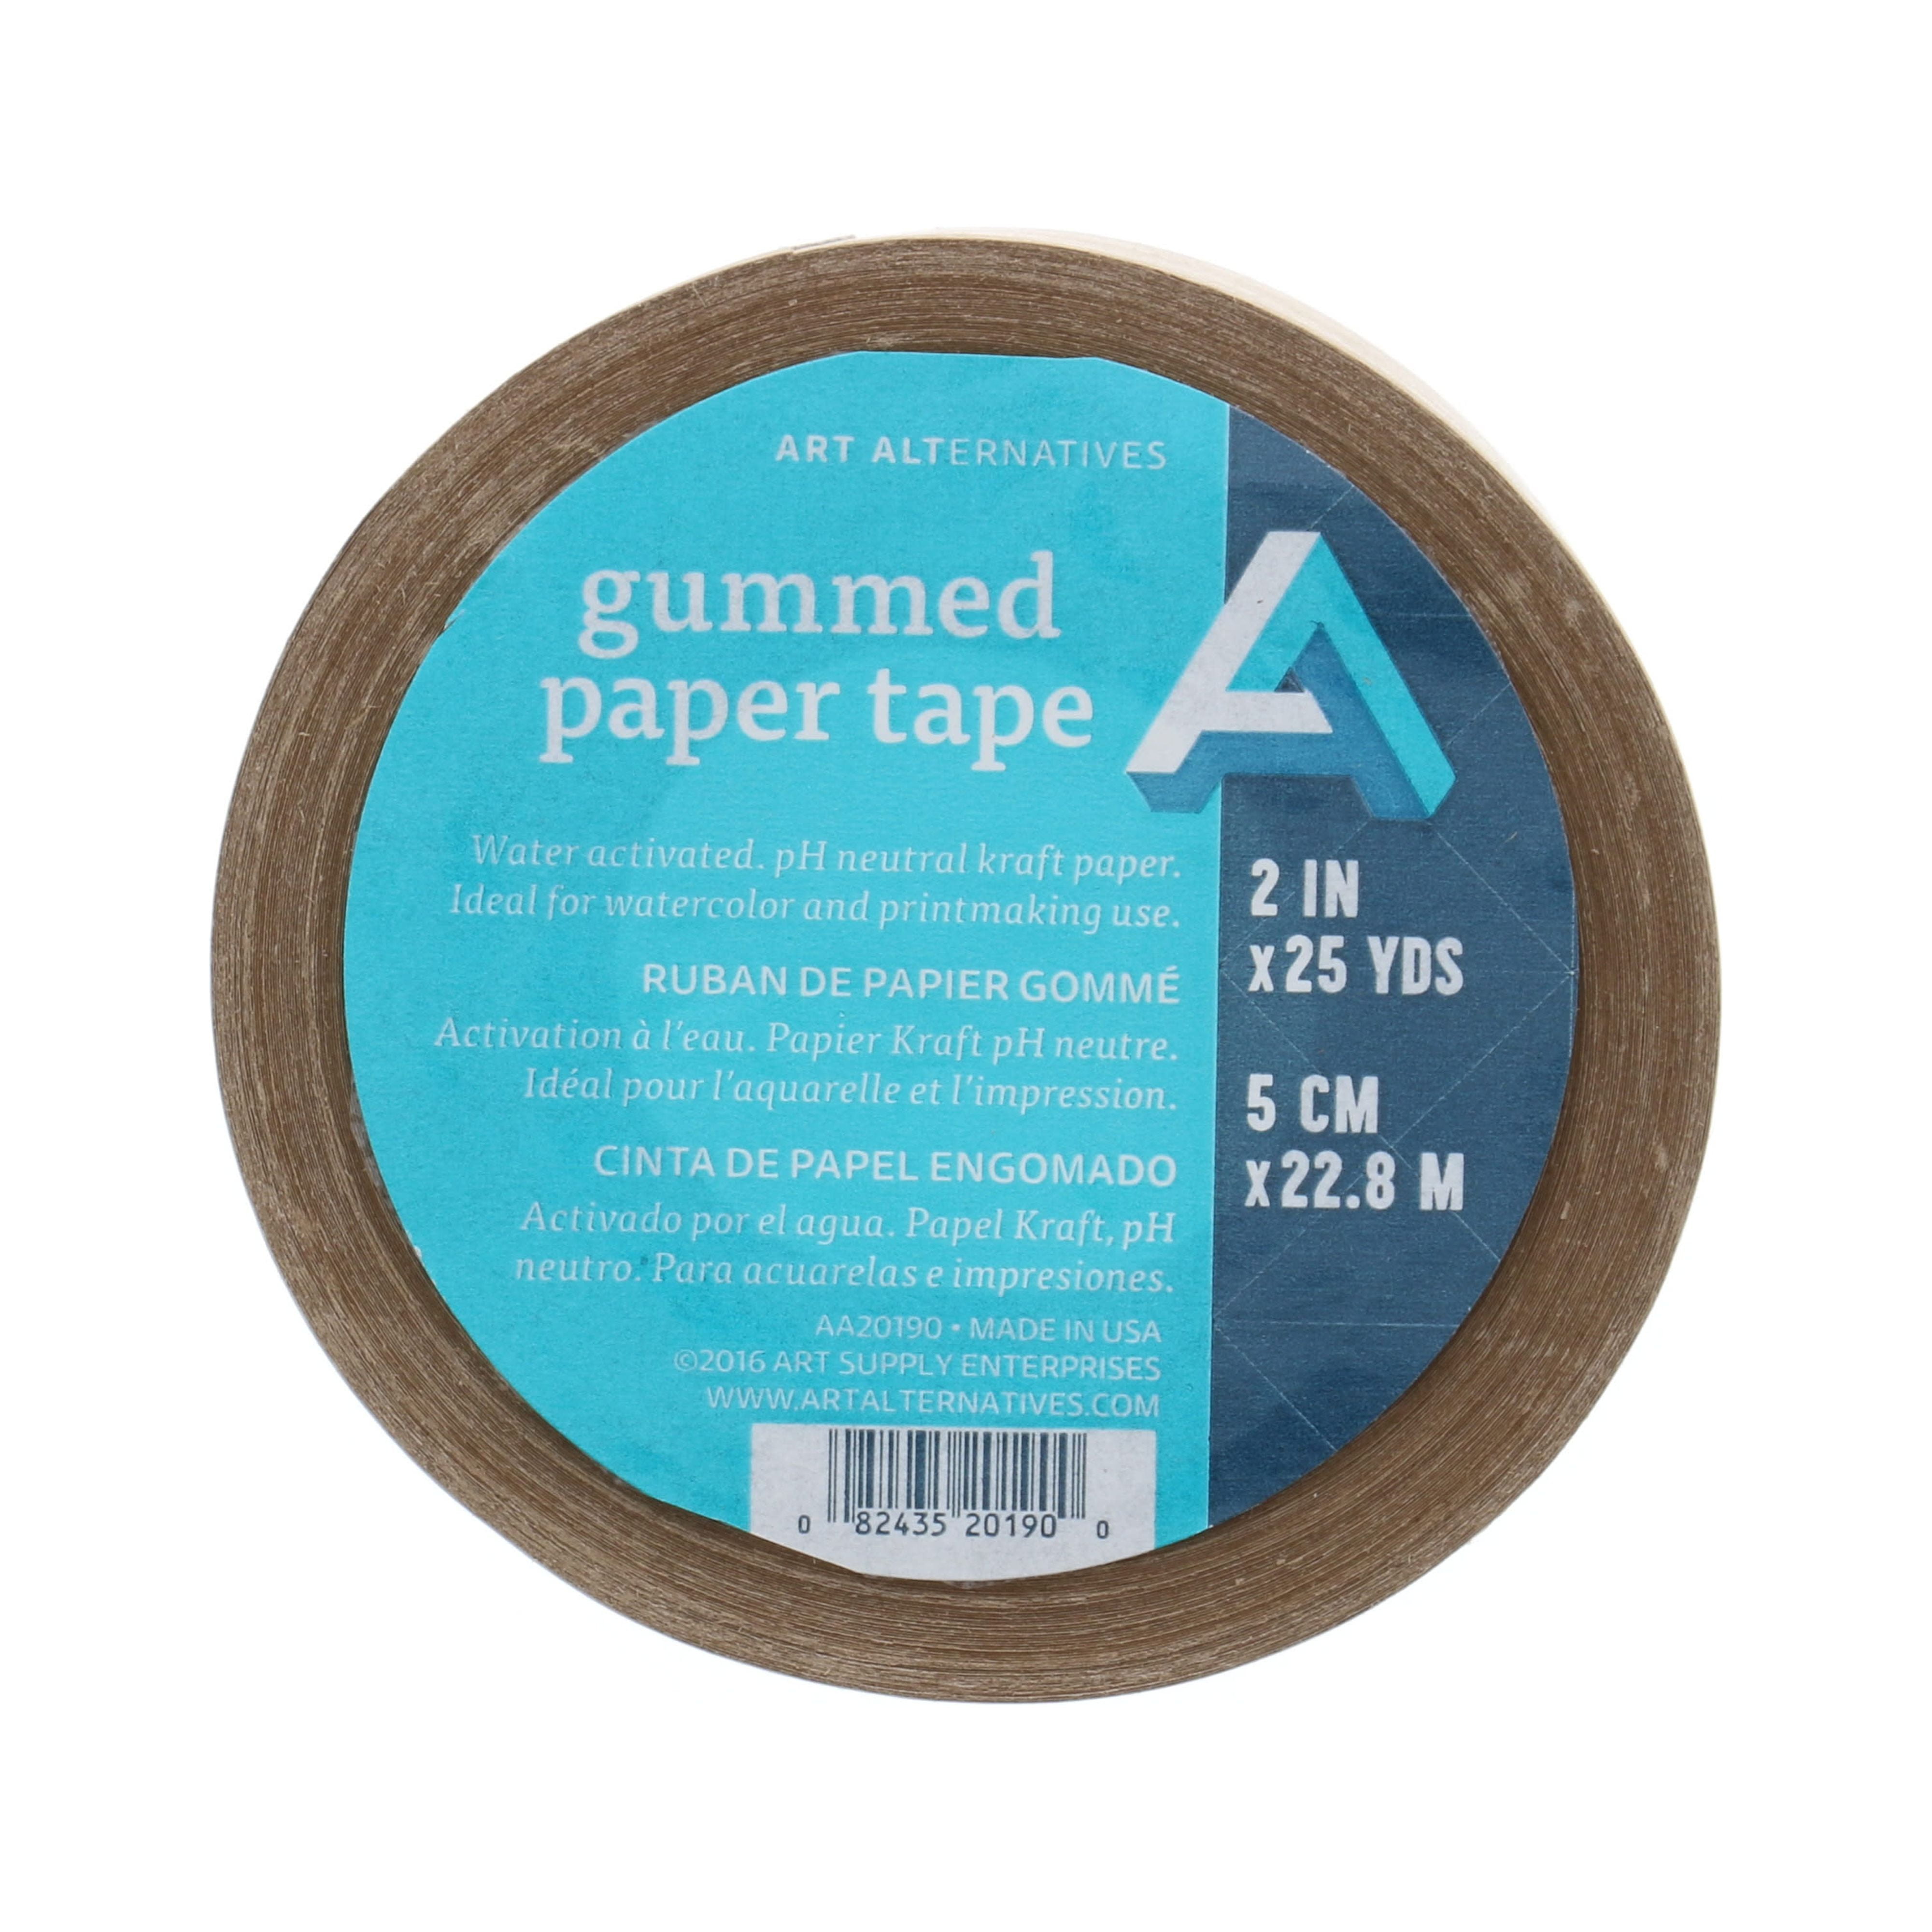 Artist Gummed Paper Tape 2 inch - The Oil Paint Store